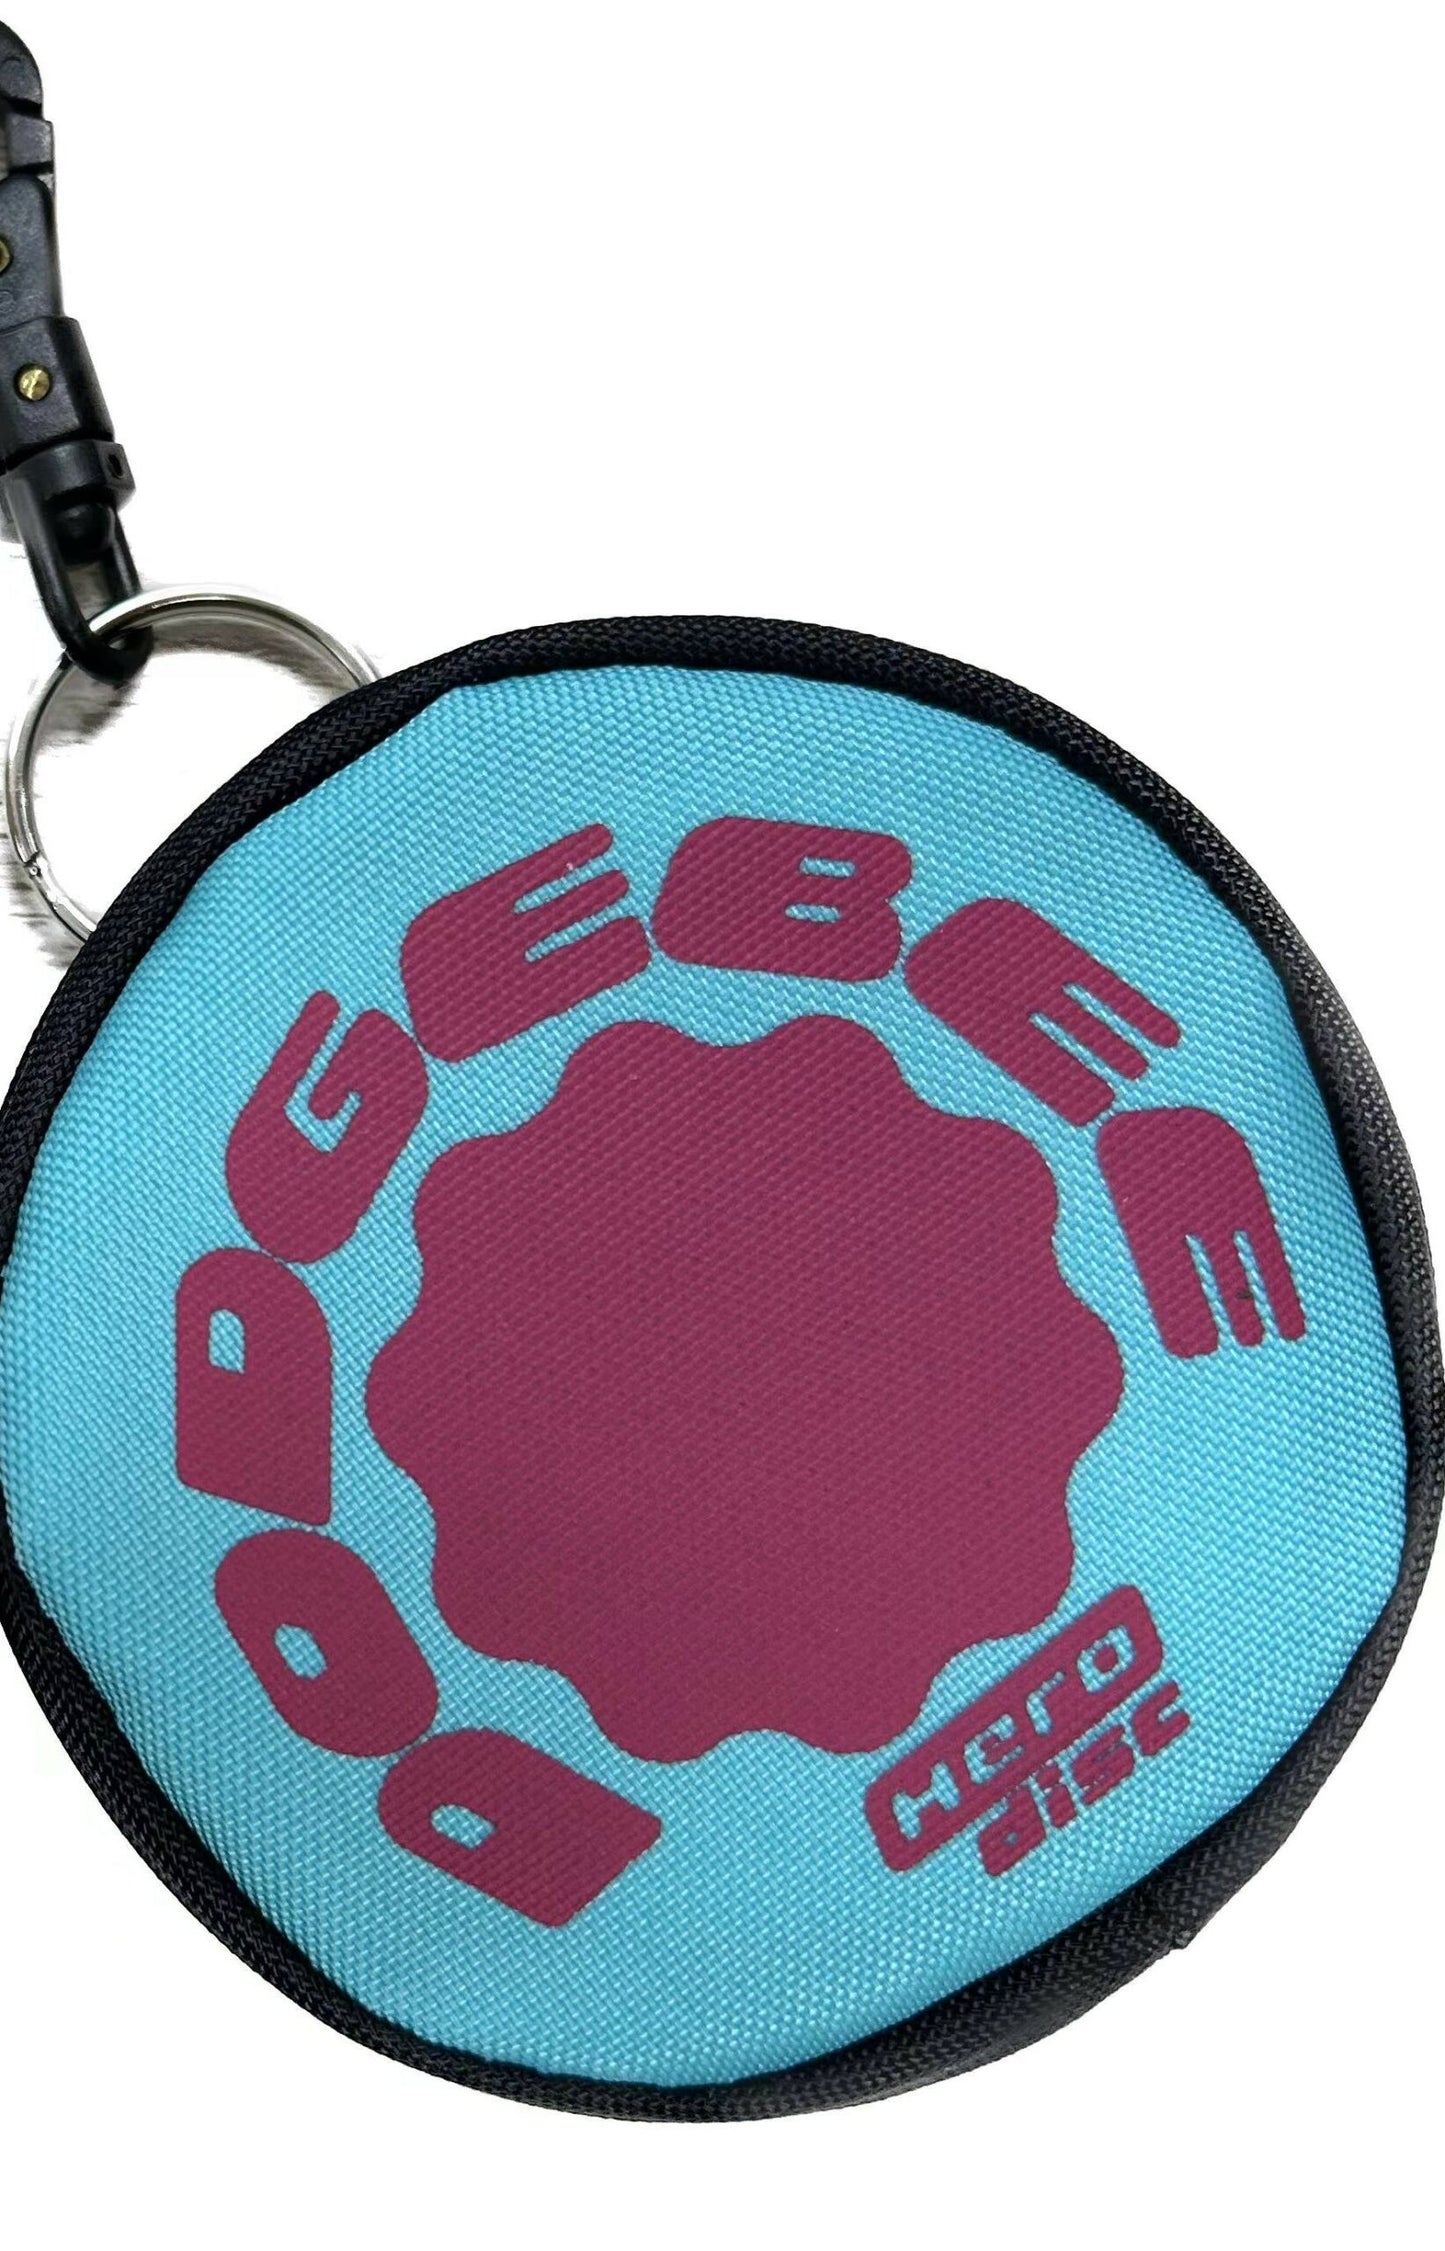 Dogebee Dodge Disk Keychain 3 Colors